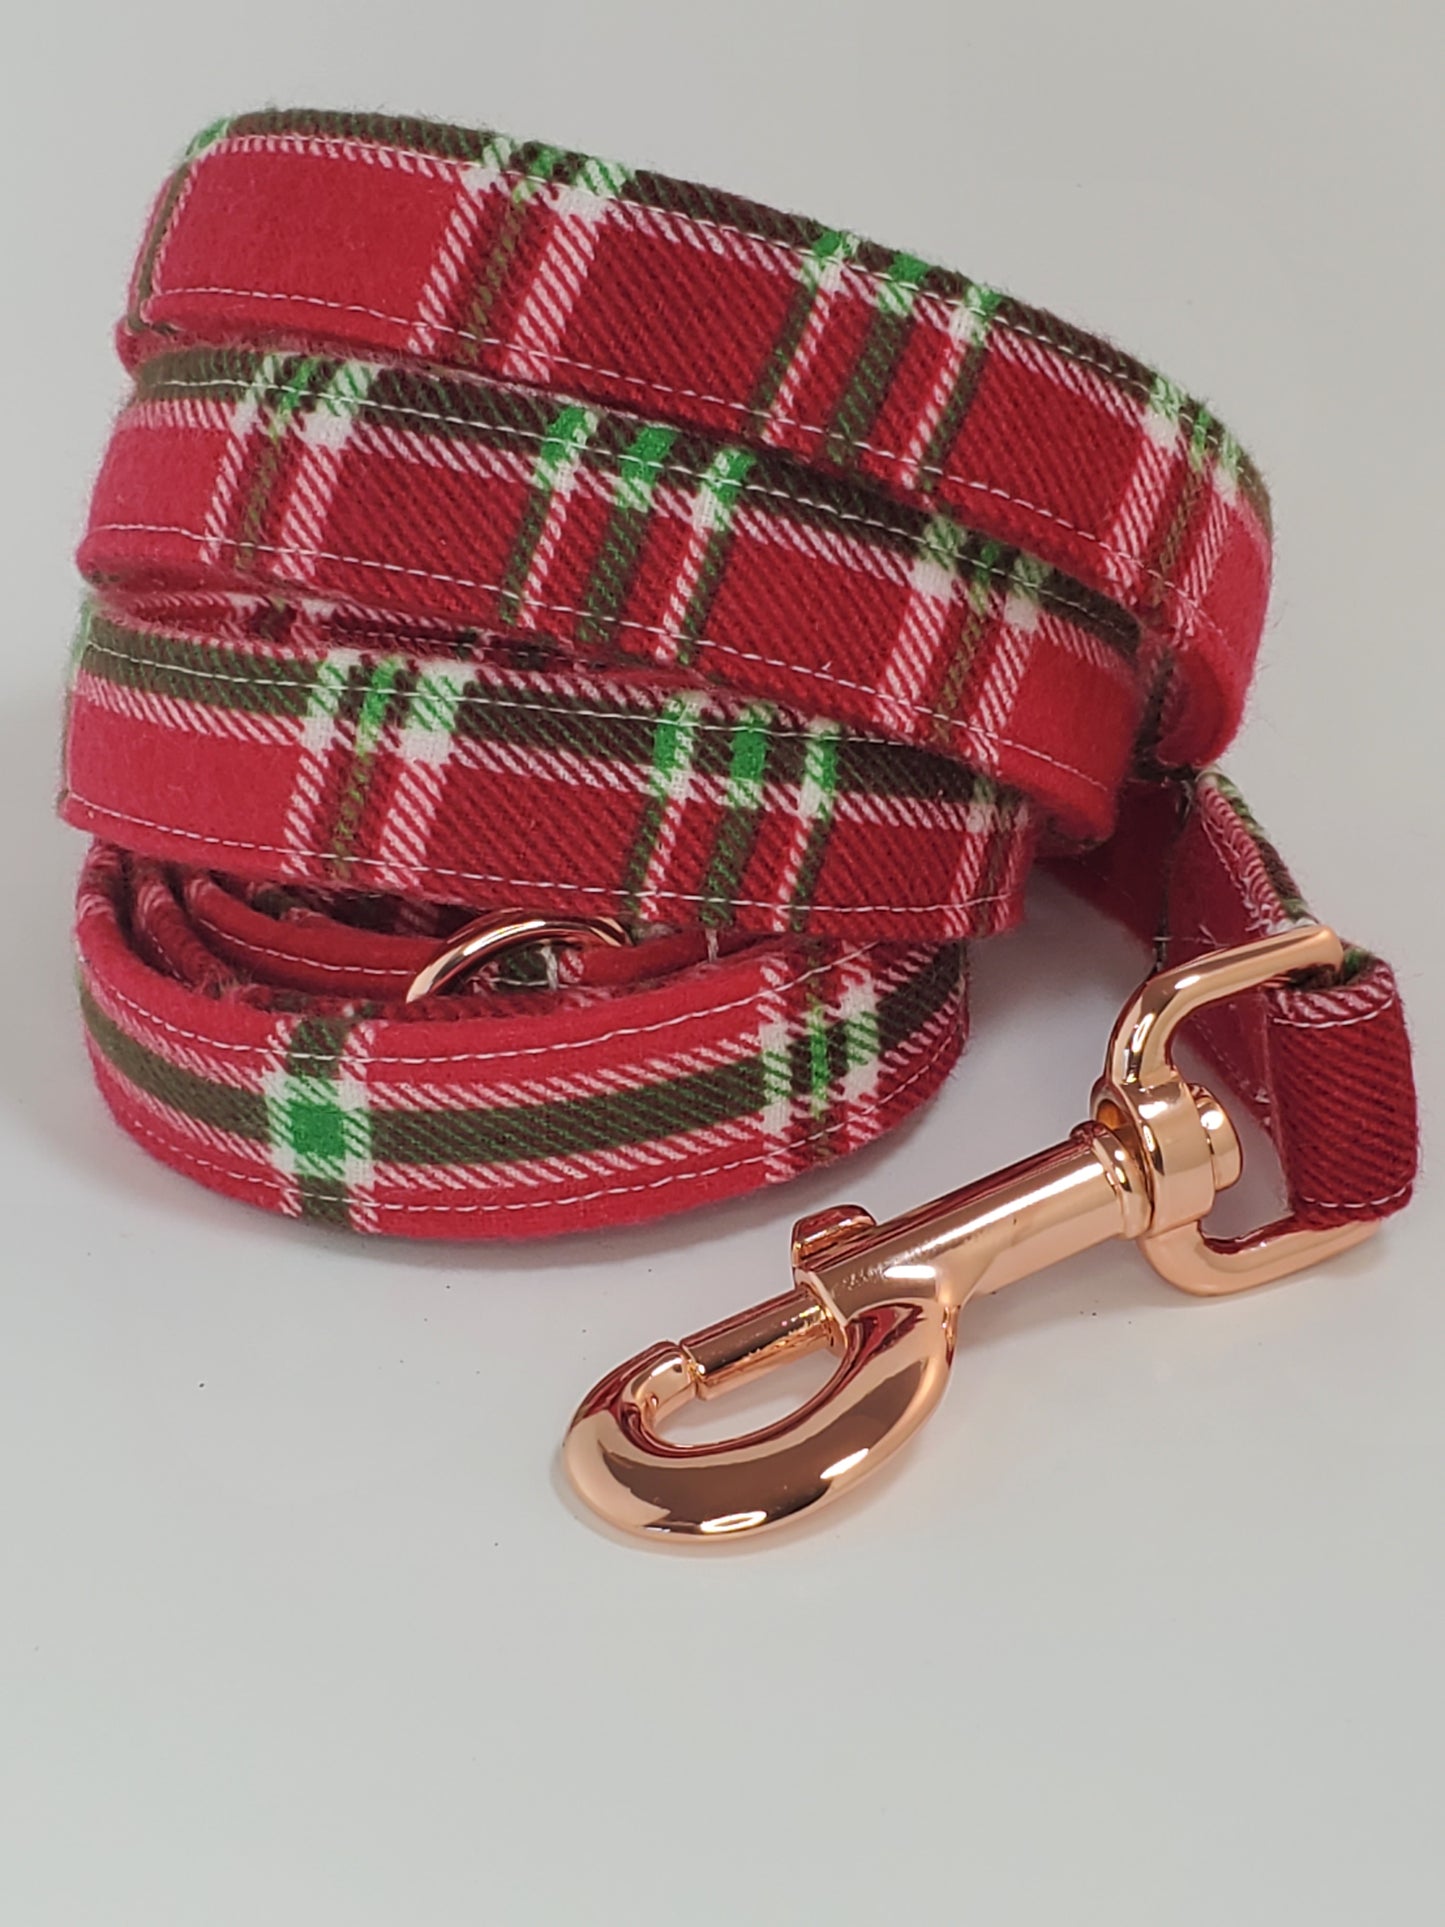 Traditional Red Super Snuggle Fabric Dog Leash